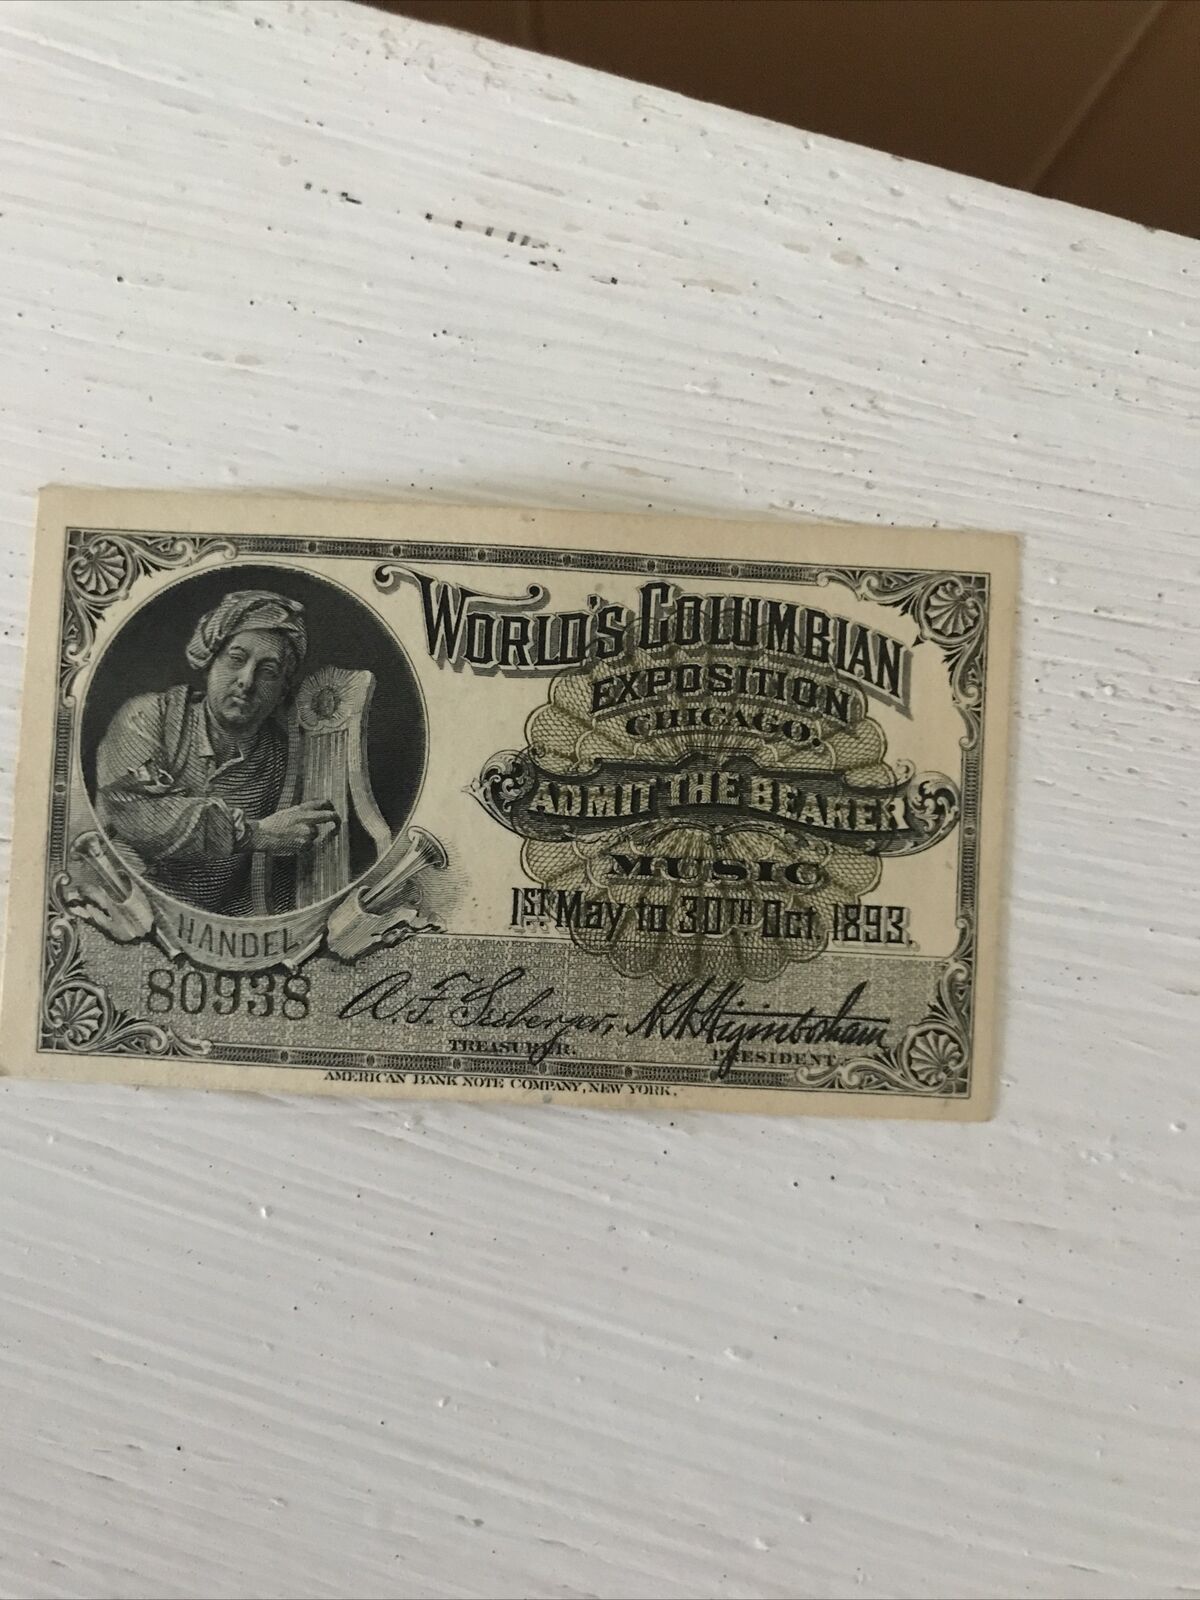 World’s Columbian Expo 1893 Chicago Handel Ticket Admit The Bearer